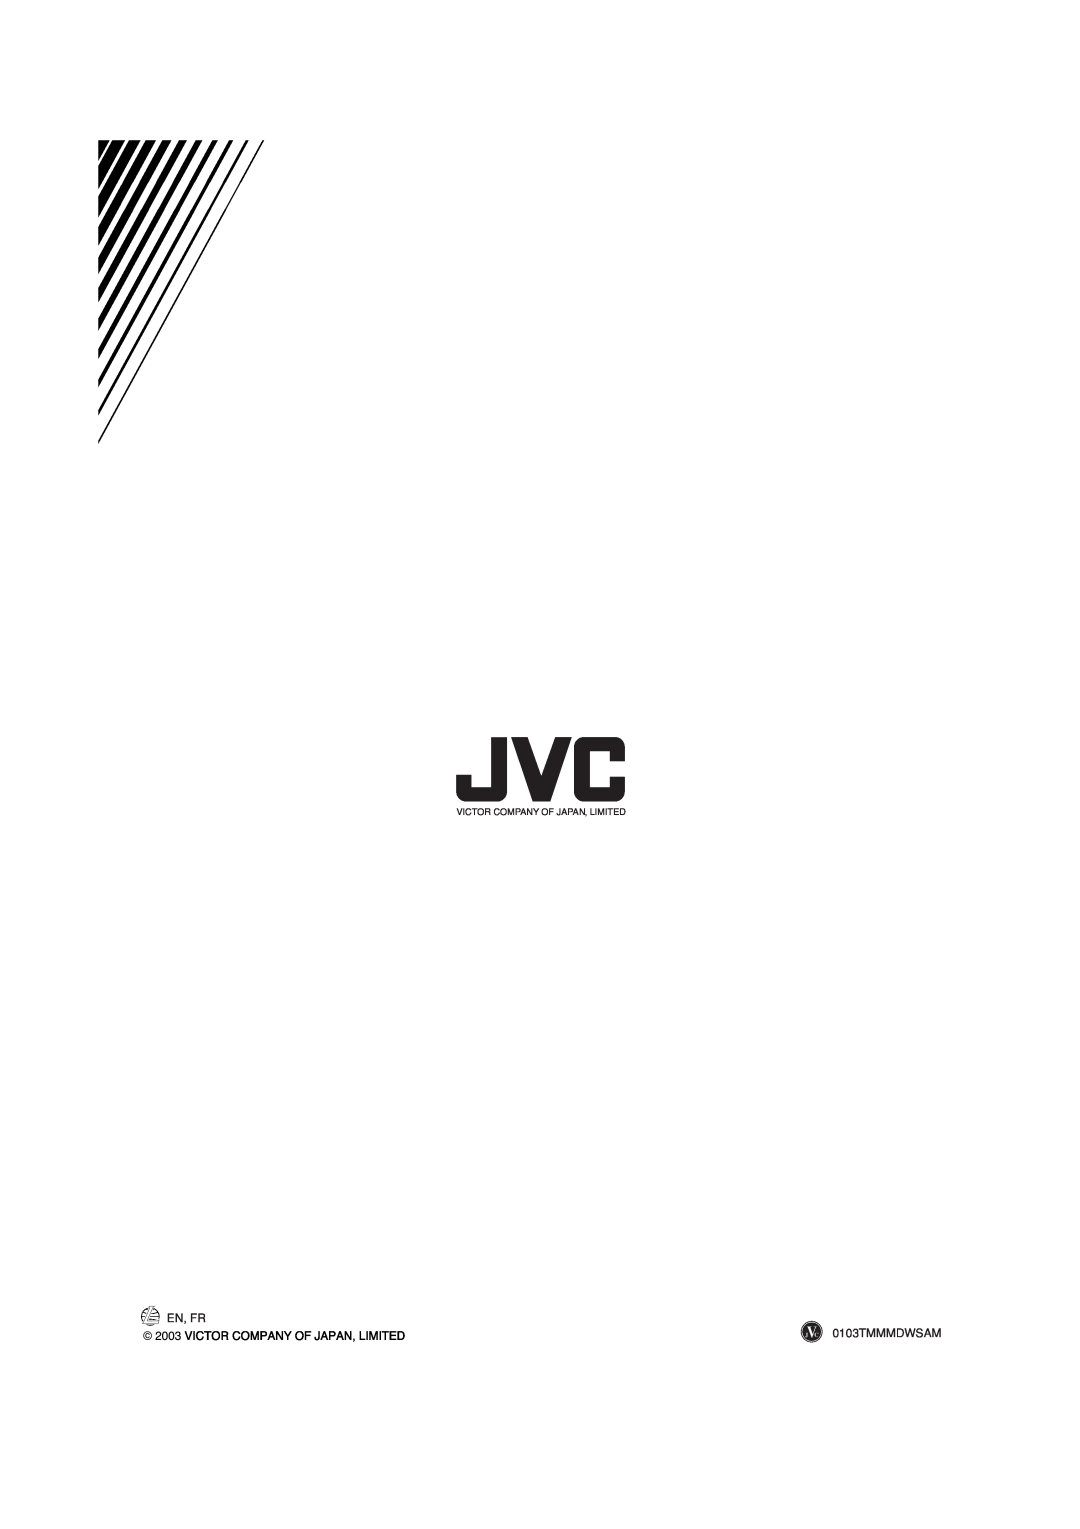 JVC MX-GT88 manual EN, FR JVC 0103TMMMDWSAM, Victor Company Of Japan, Limited 